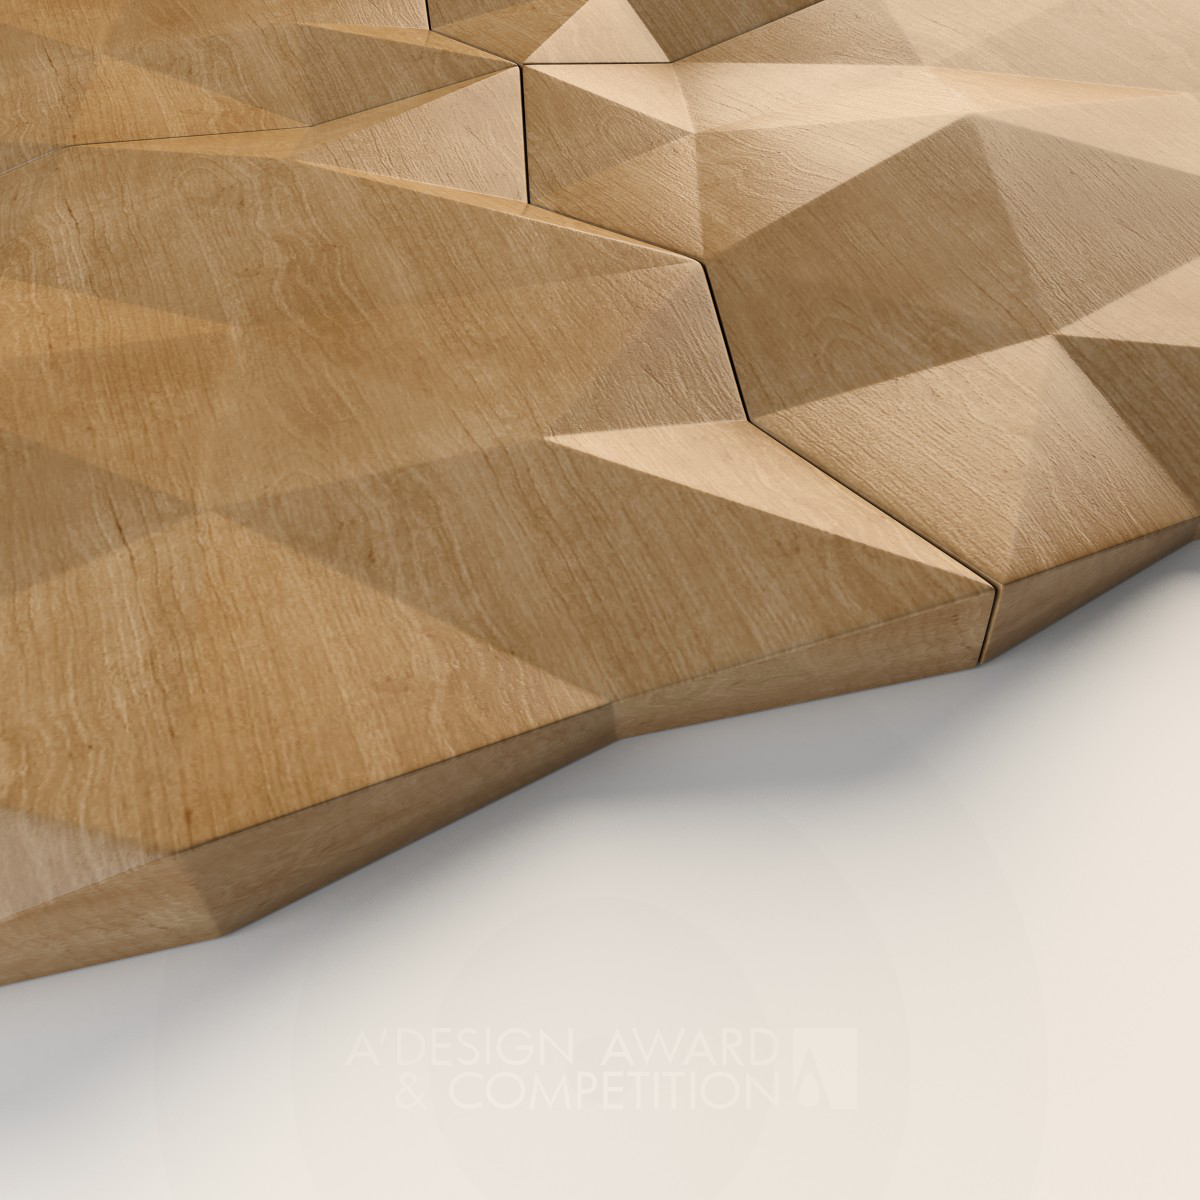 POLEE: Polygonal Shaped Interior Wall Tiling